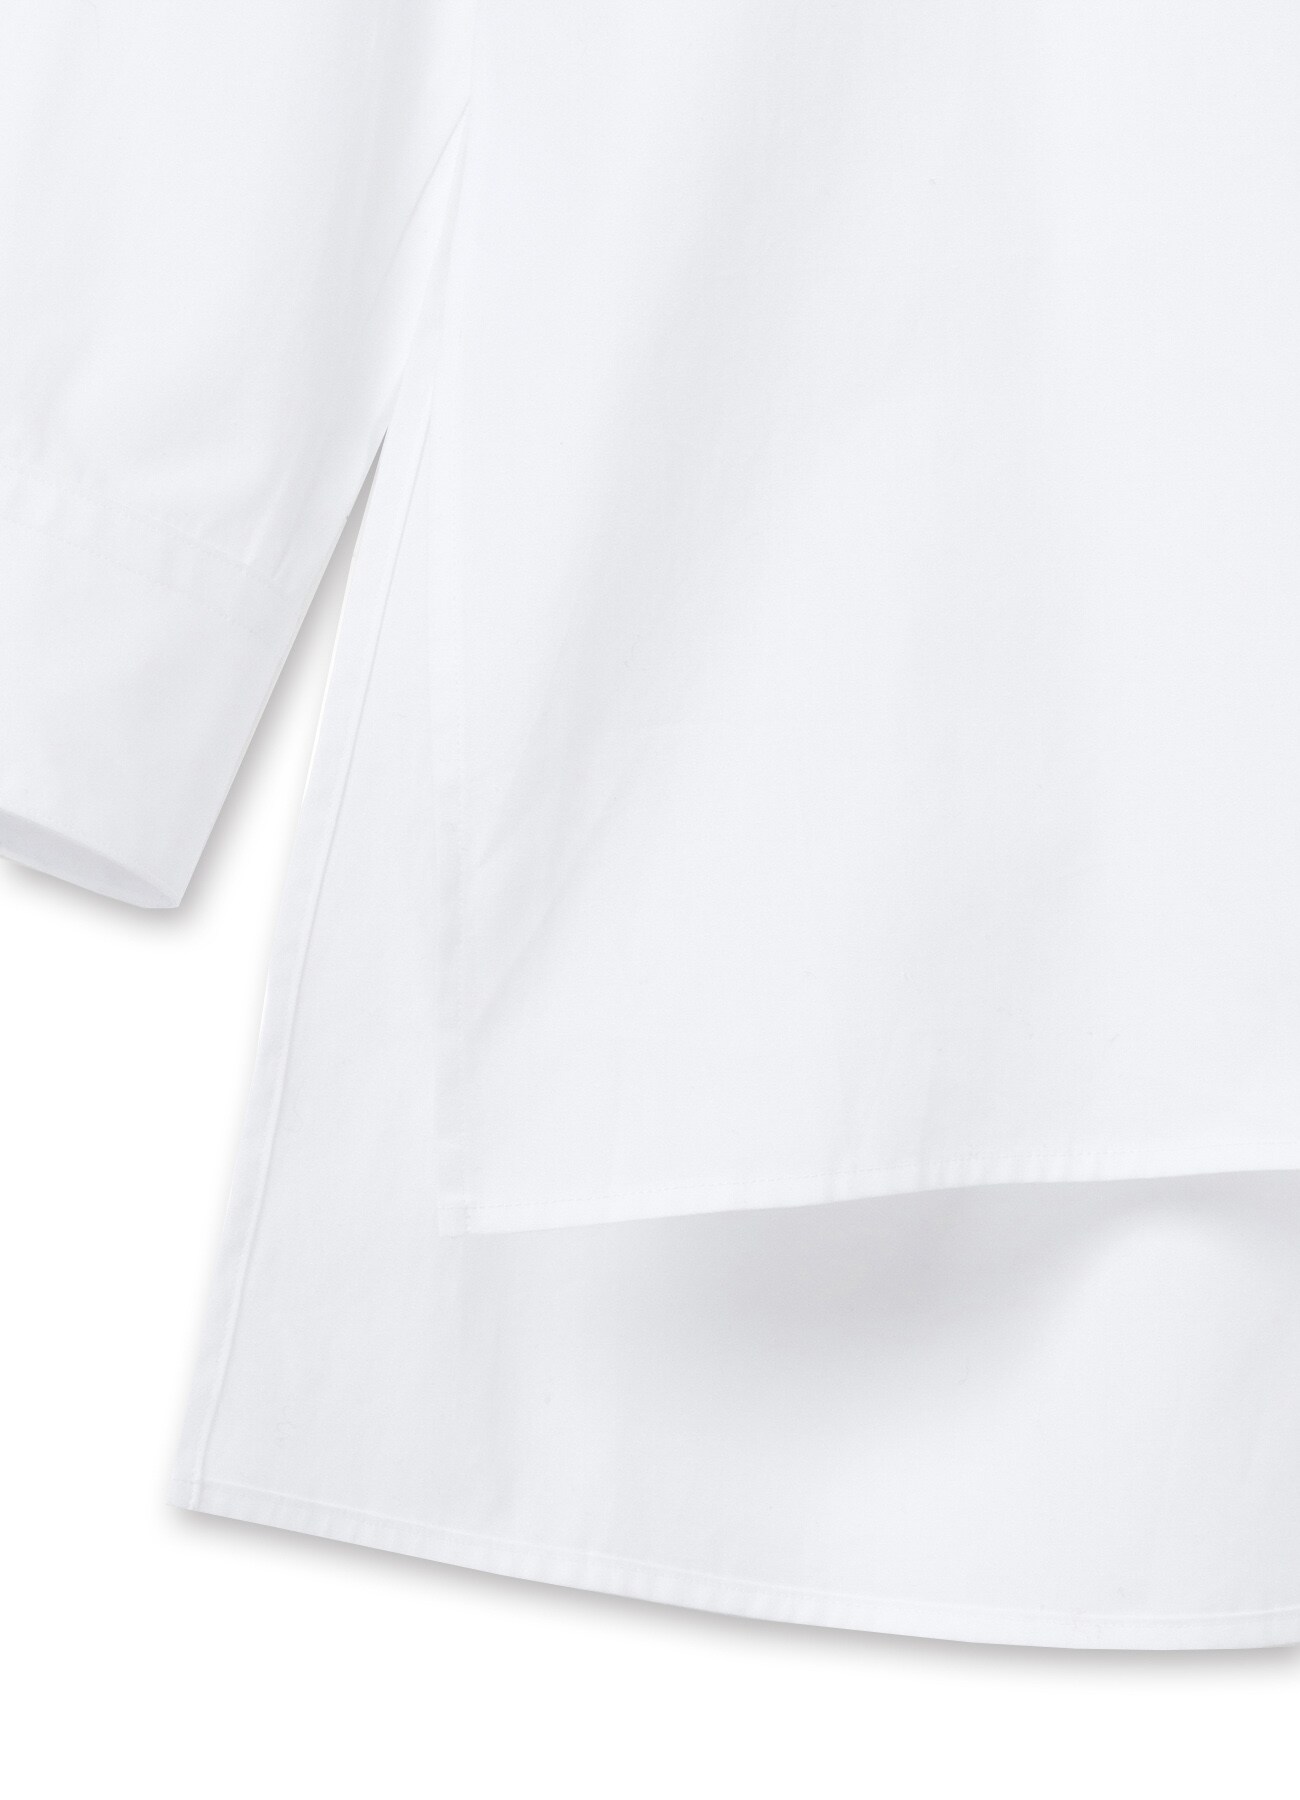 100/2 cotton broad Eyelet bow collar shirt